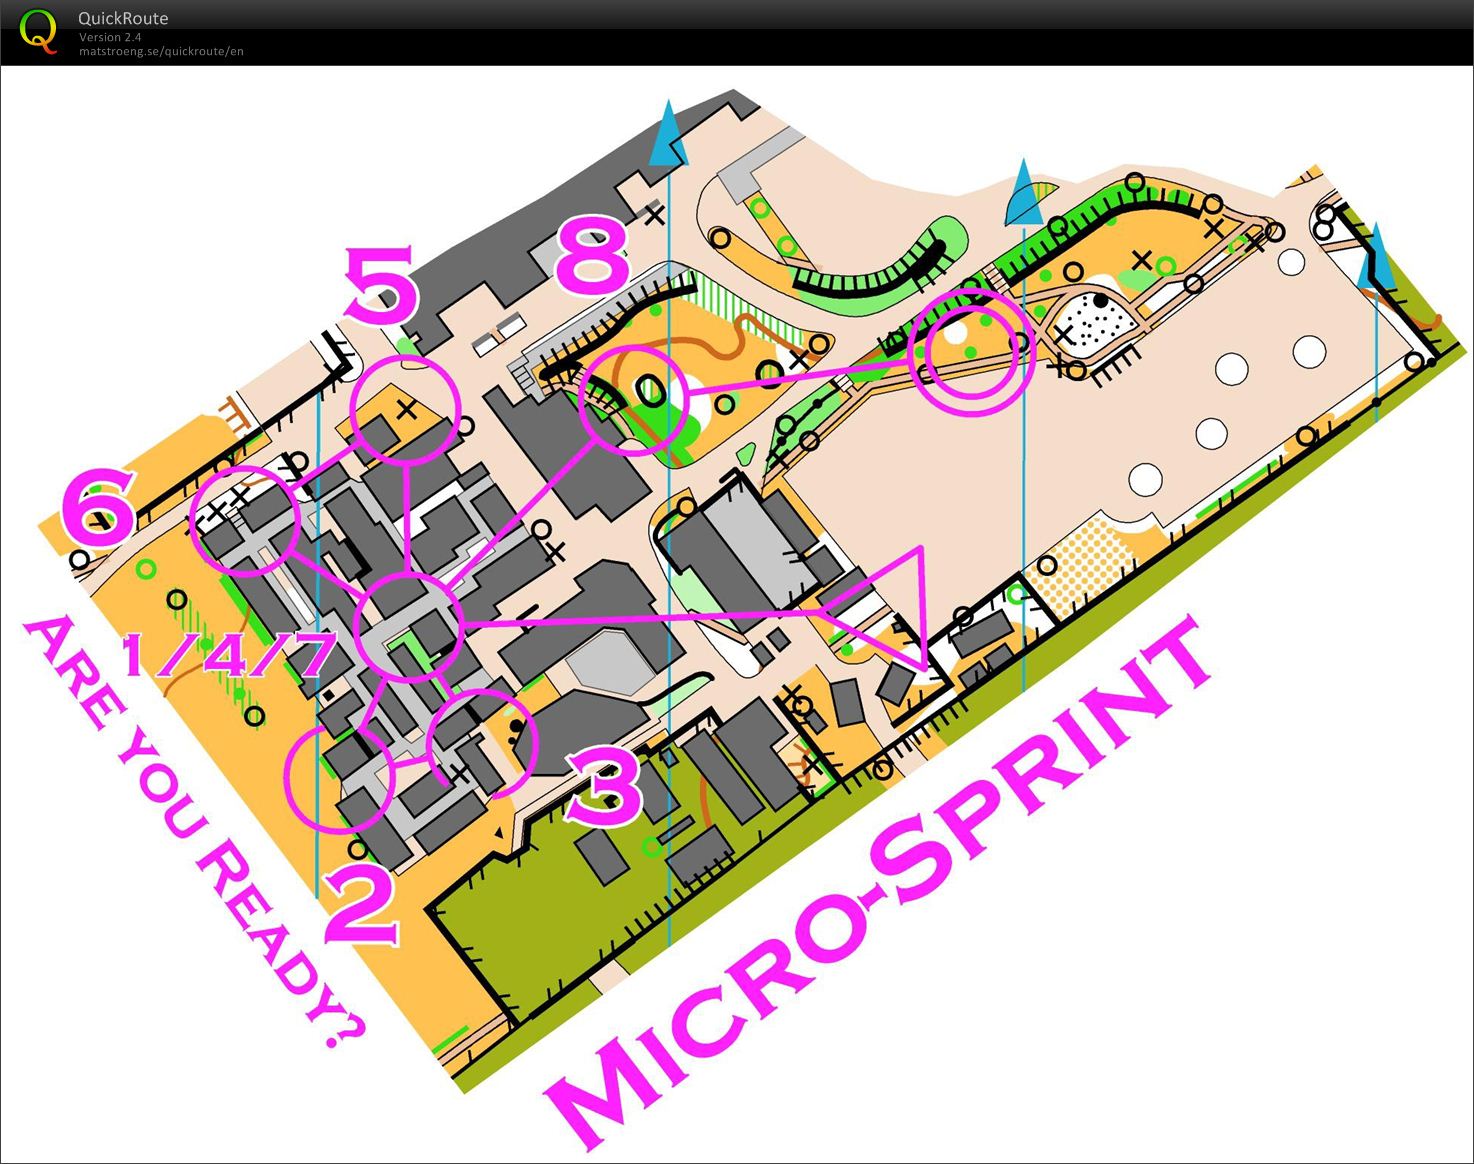 Matts MicroSprint (31-01-2012)